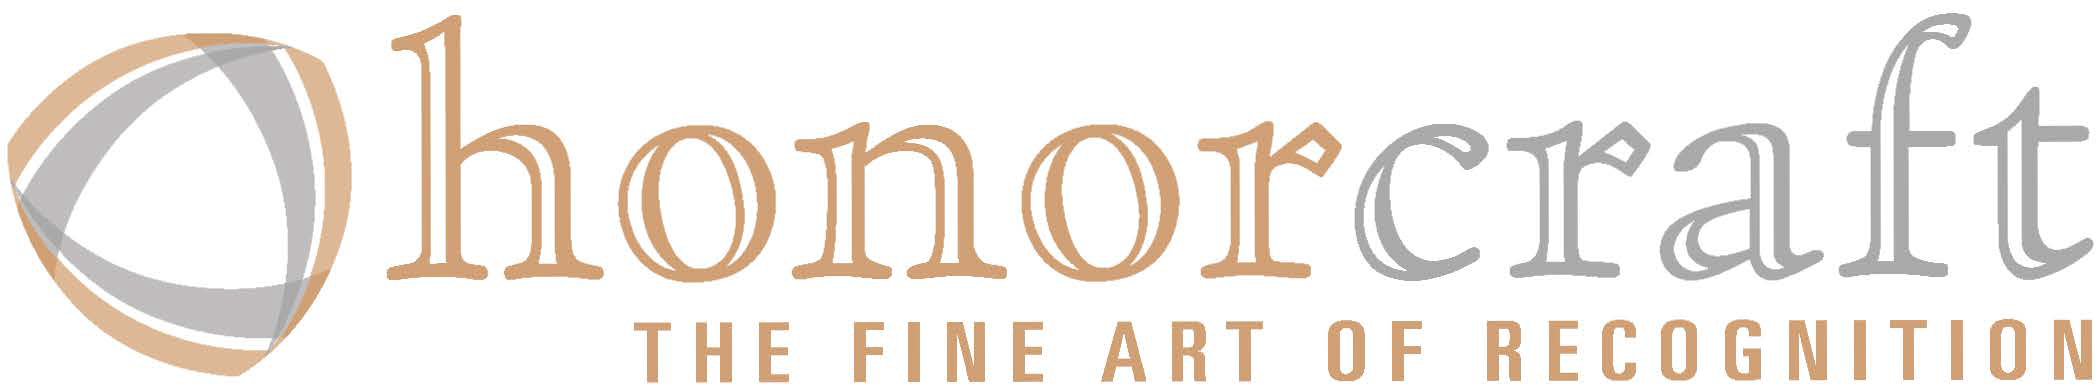 Honor Craft Sponsorship logo